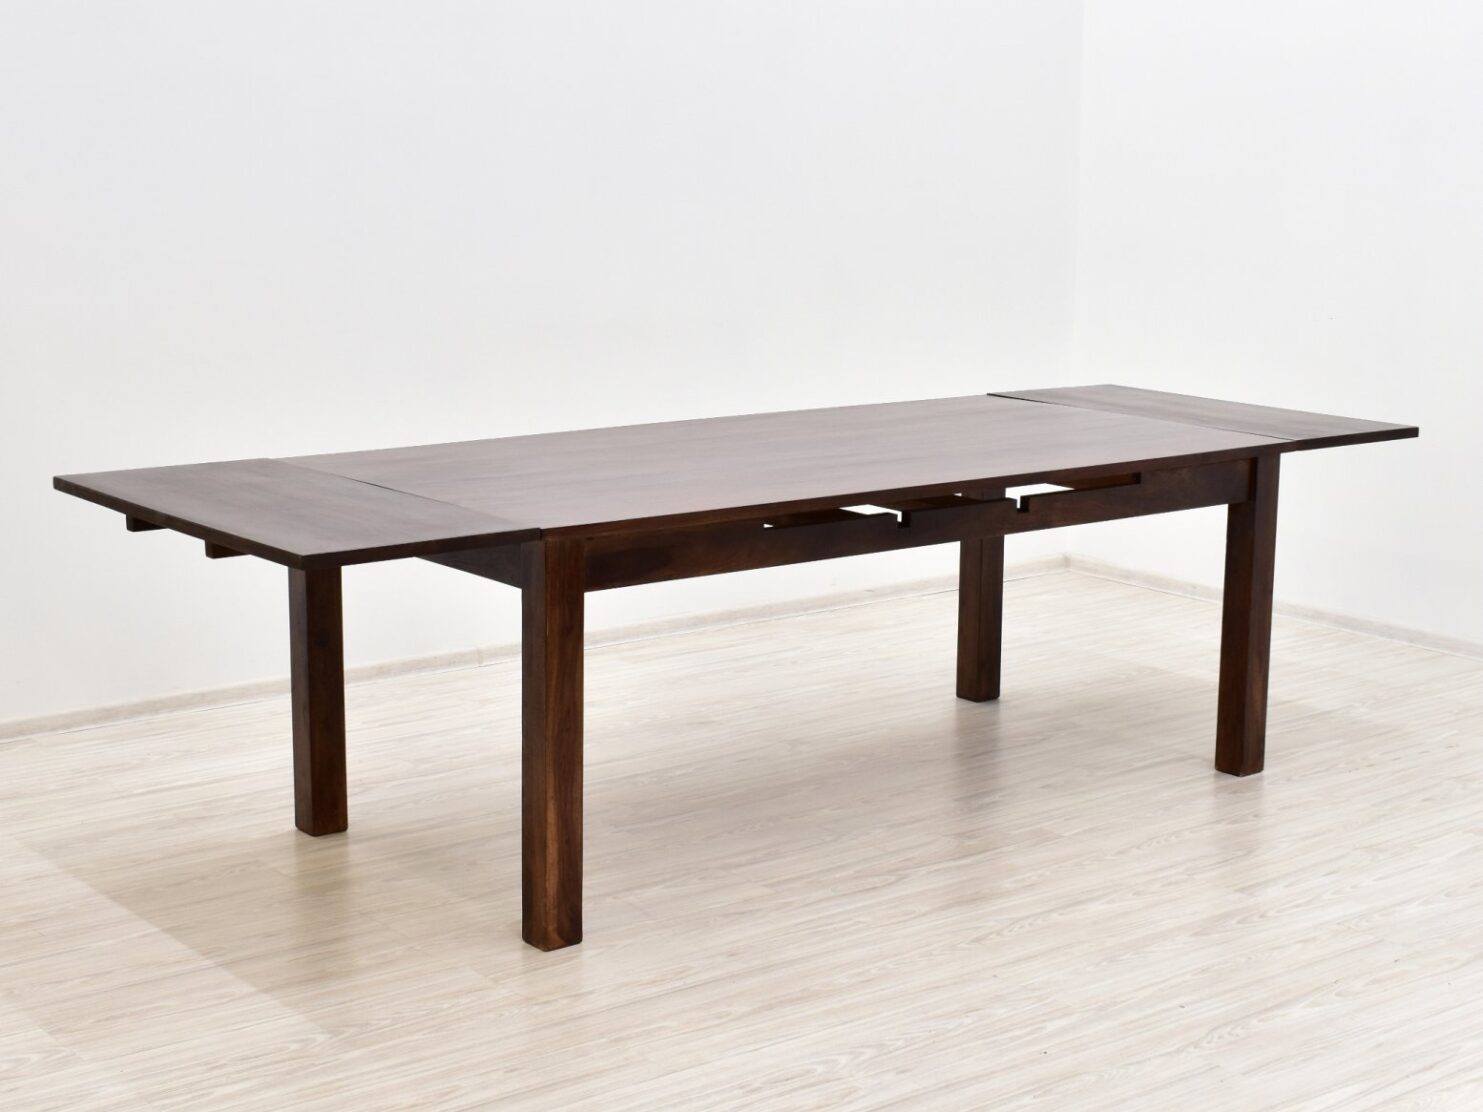 stol-kolonialny-lite-drewno-palisander-indyjski-rozkladany-ciemny-braz-klasyczny-masywny